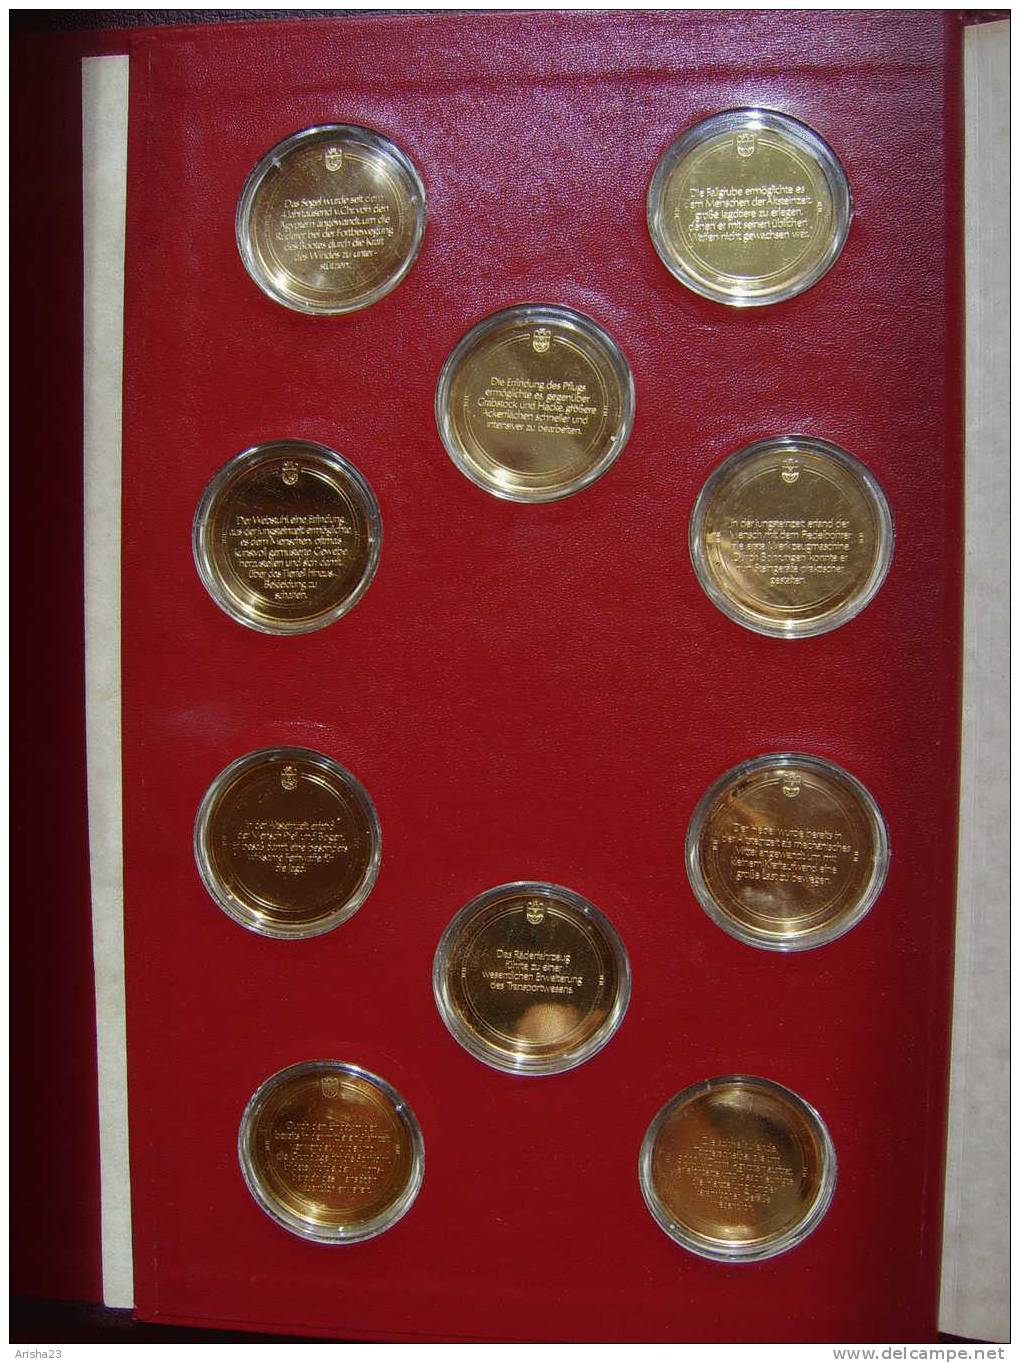 Set of 100 gilded SILVER Coins / Medals 24K gold auf silber in folder 3 albums by Bismarck museum ERSTAUSGABE Nr. 1272